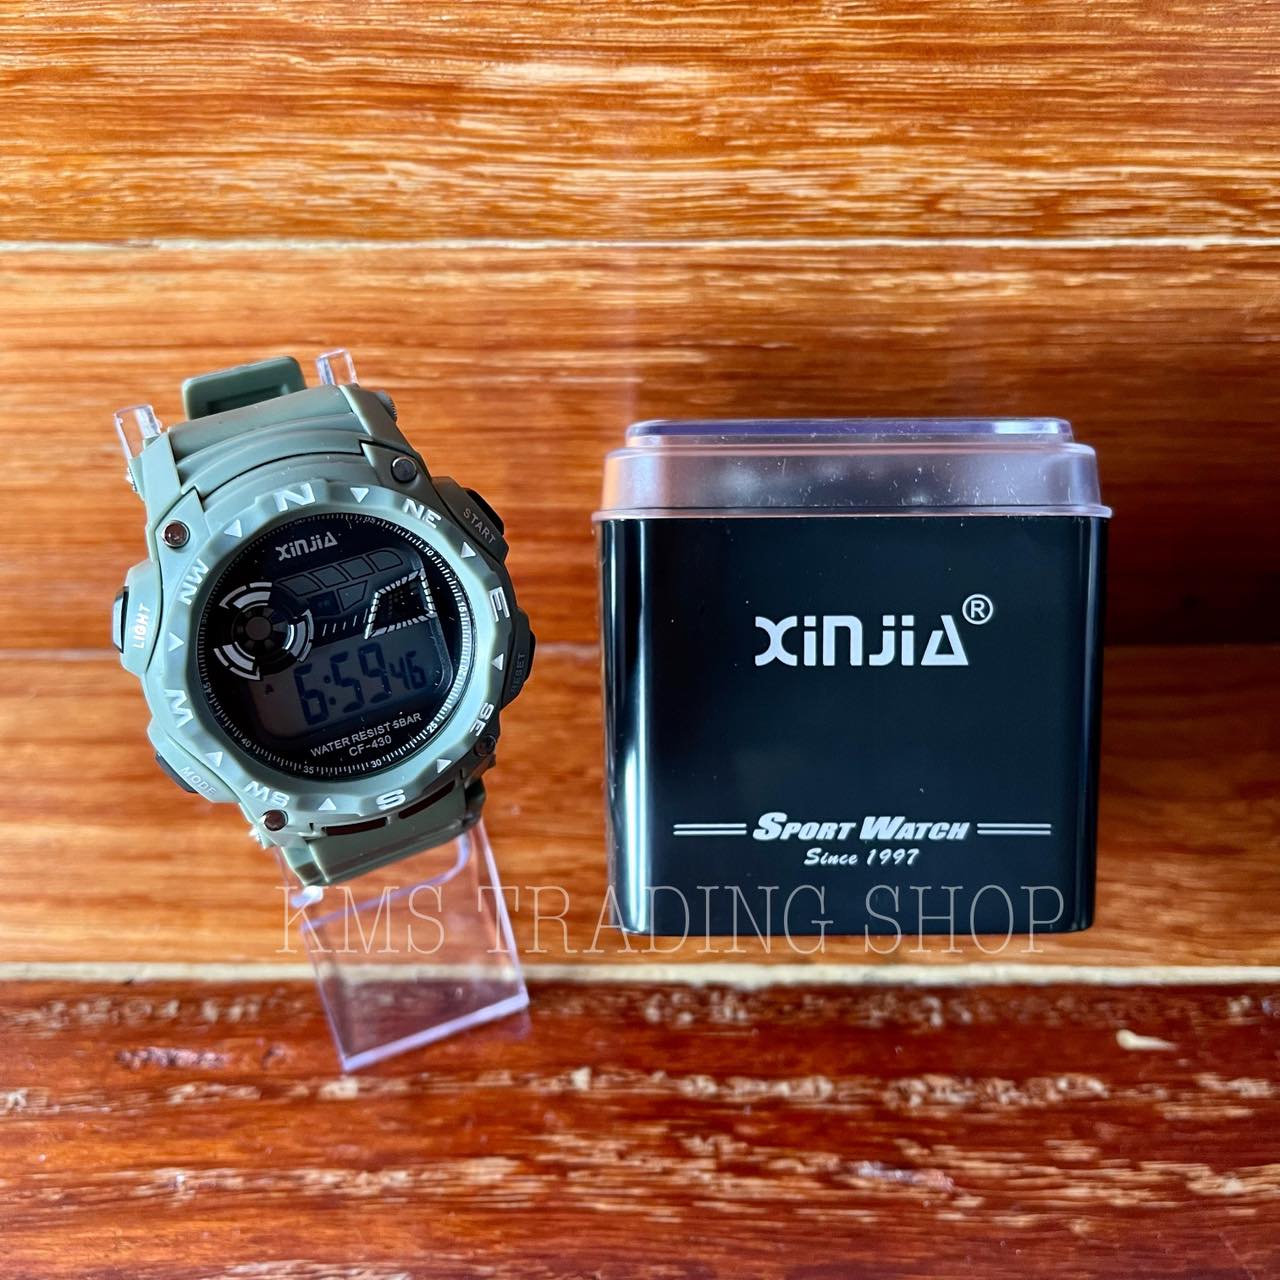 xinjia wholesale alarm energetic watch digital| Alibaba.com